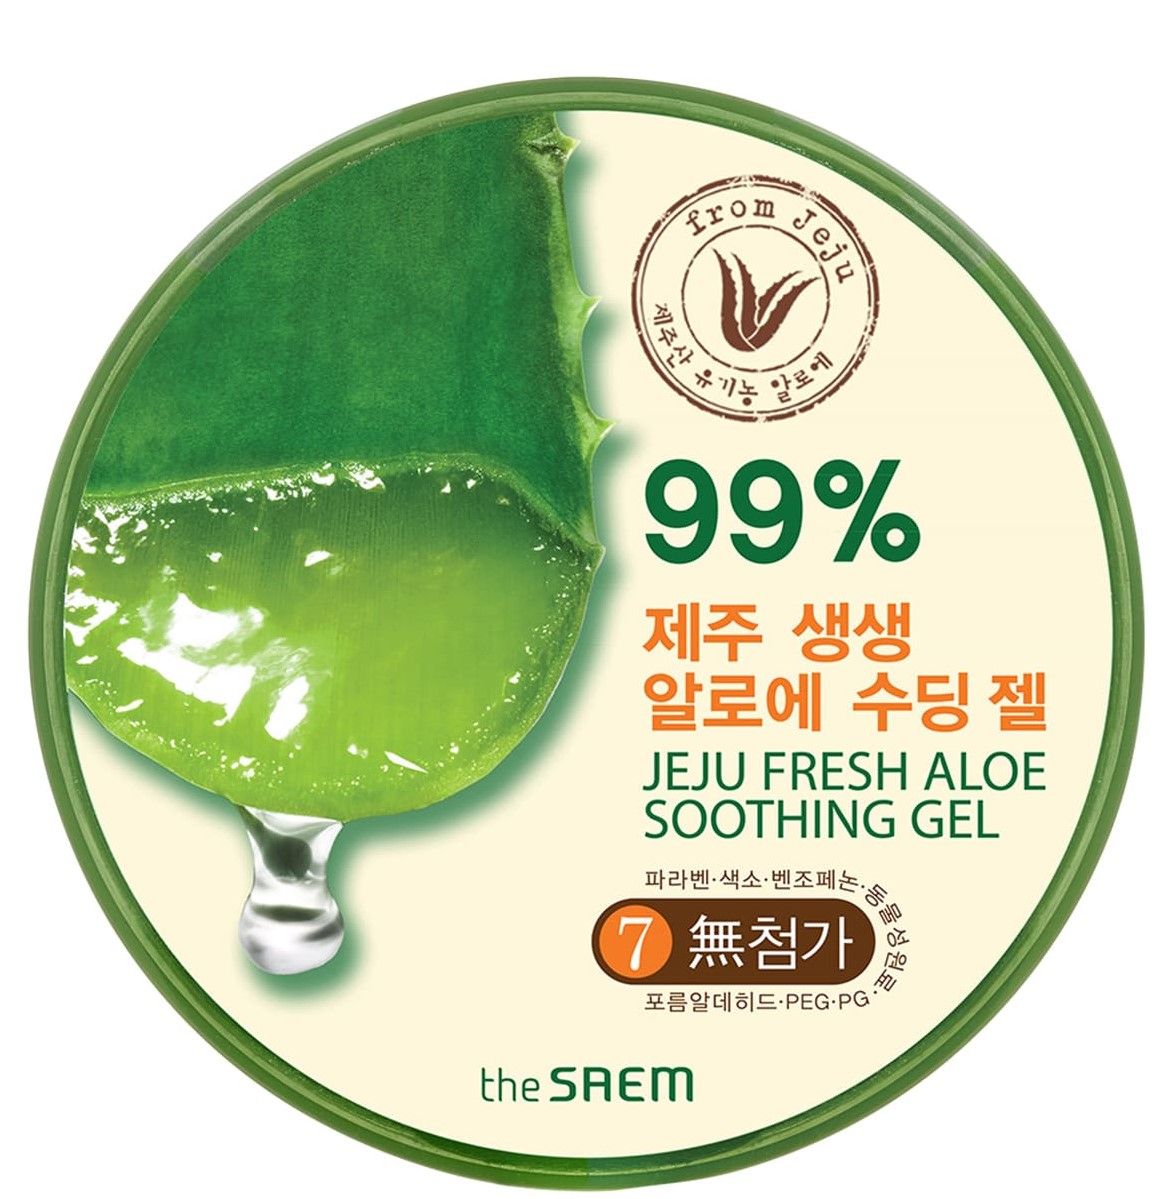 The Saem Jeju Fresh 99% гель для лица и тела, słoik гель универсальный с алоэ the saem soothing gel 99% jeju fresh aloe tube 250ml